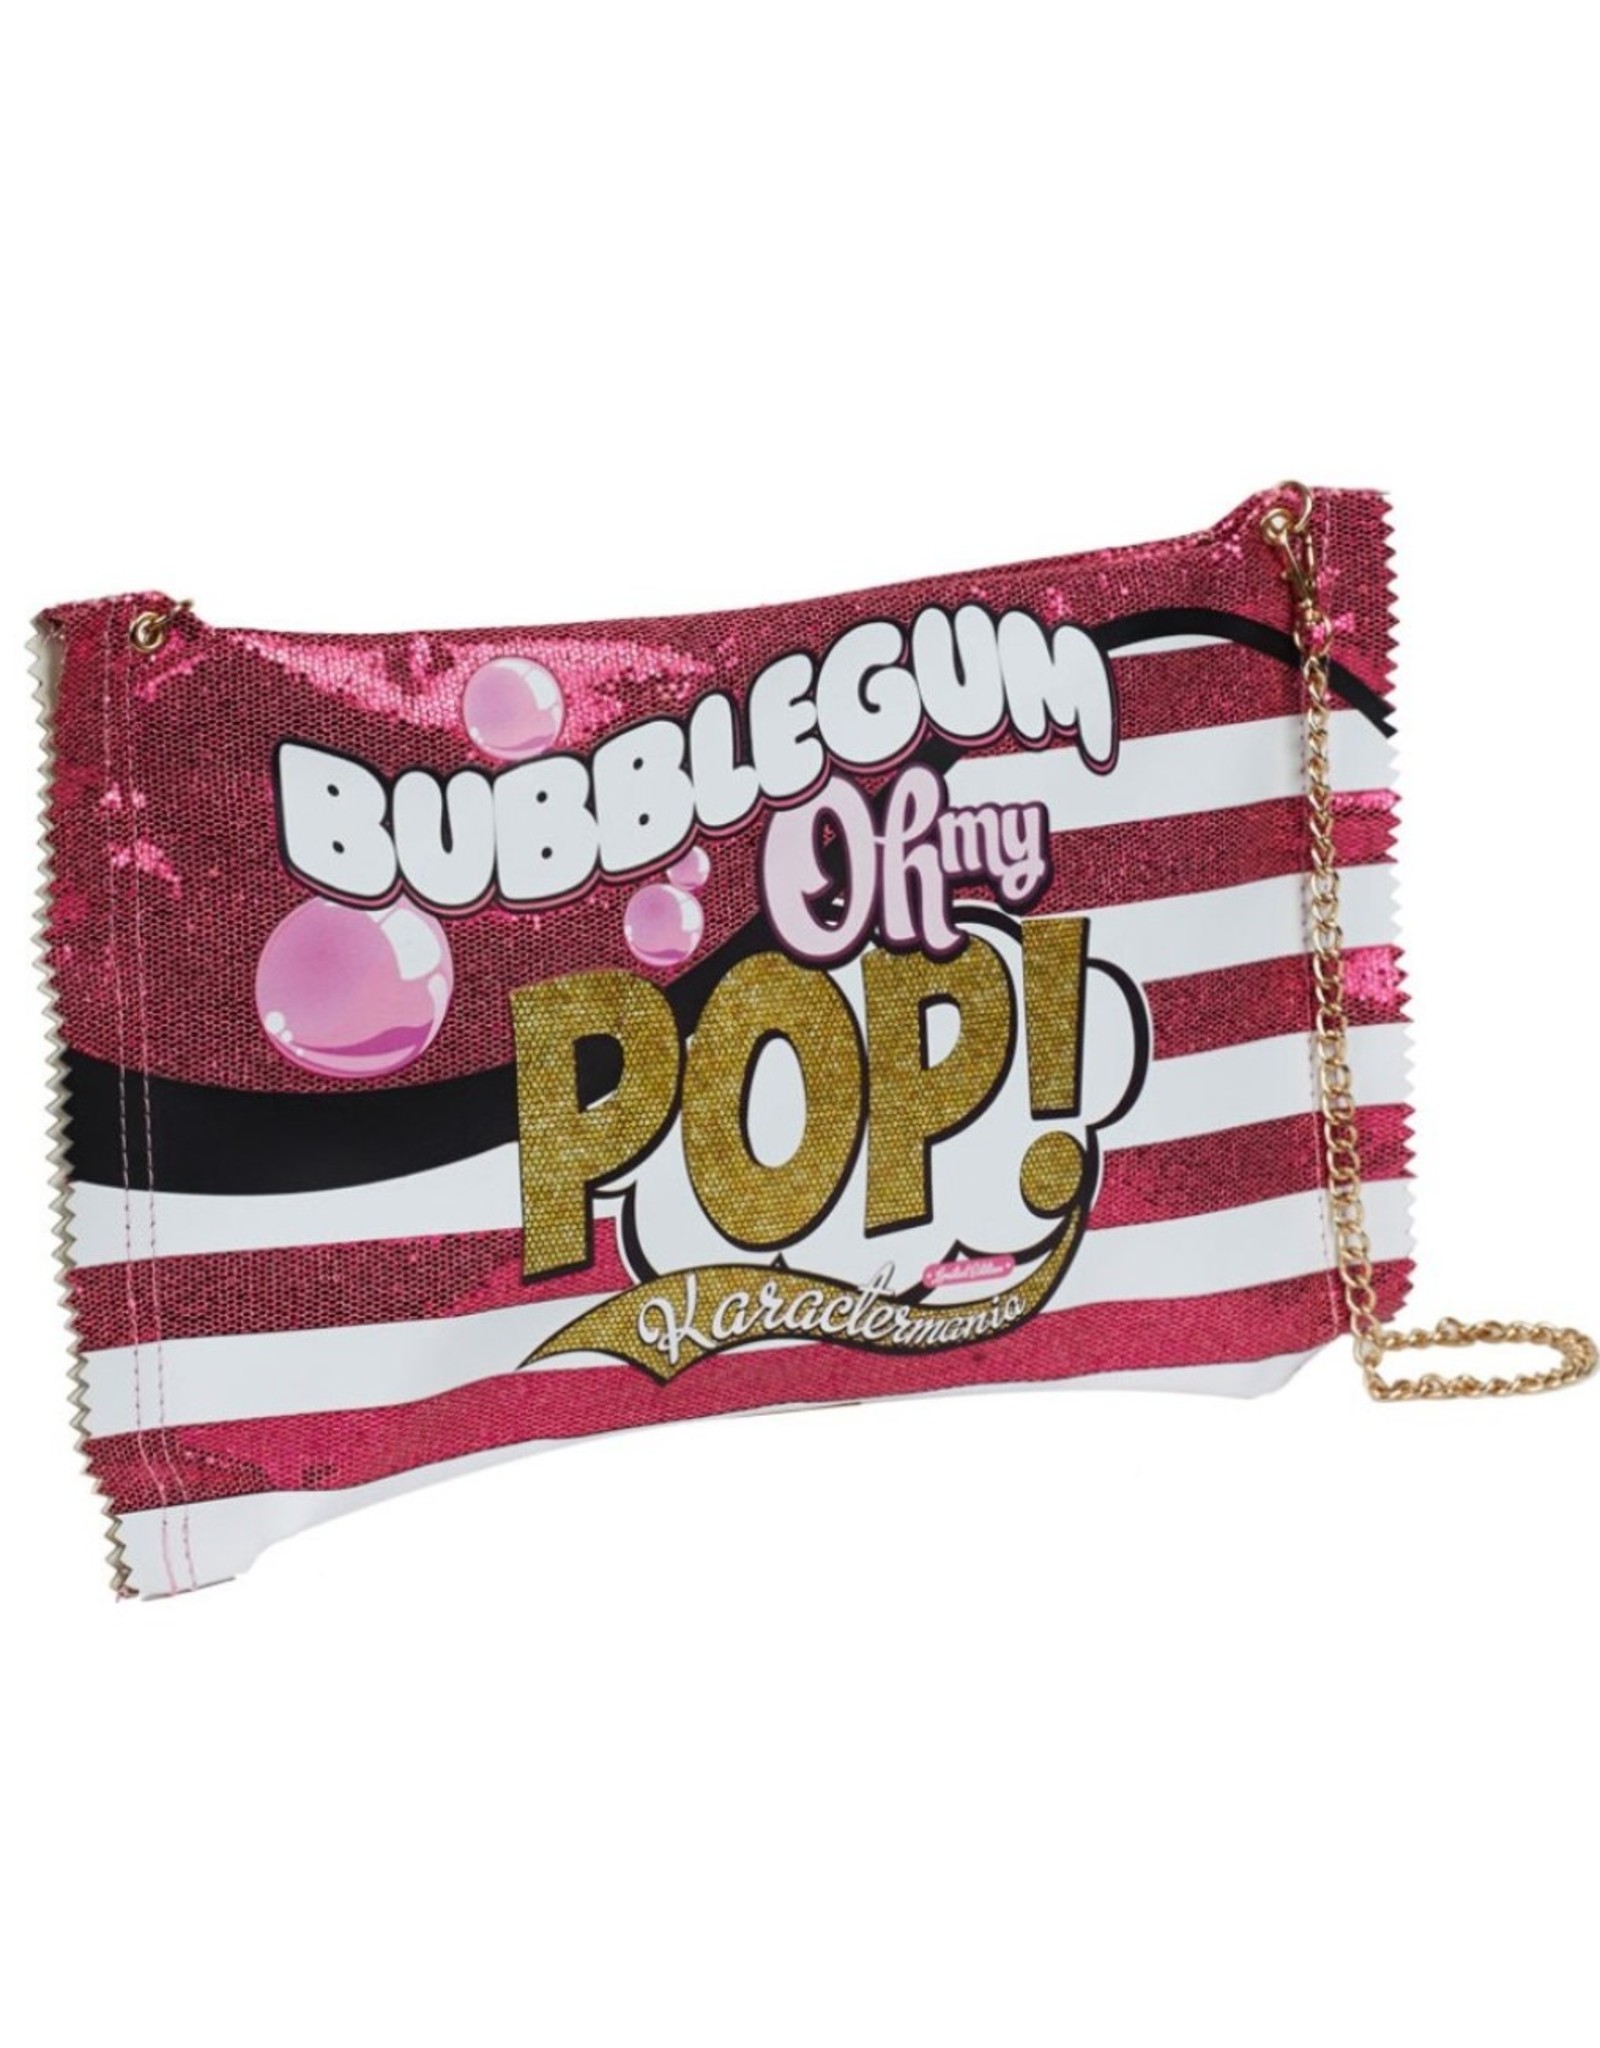 Oh my Pop! Fantasy tassen en portemonnees - Oh My Pop! Bubblegum schoudertas